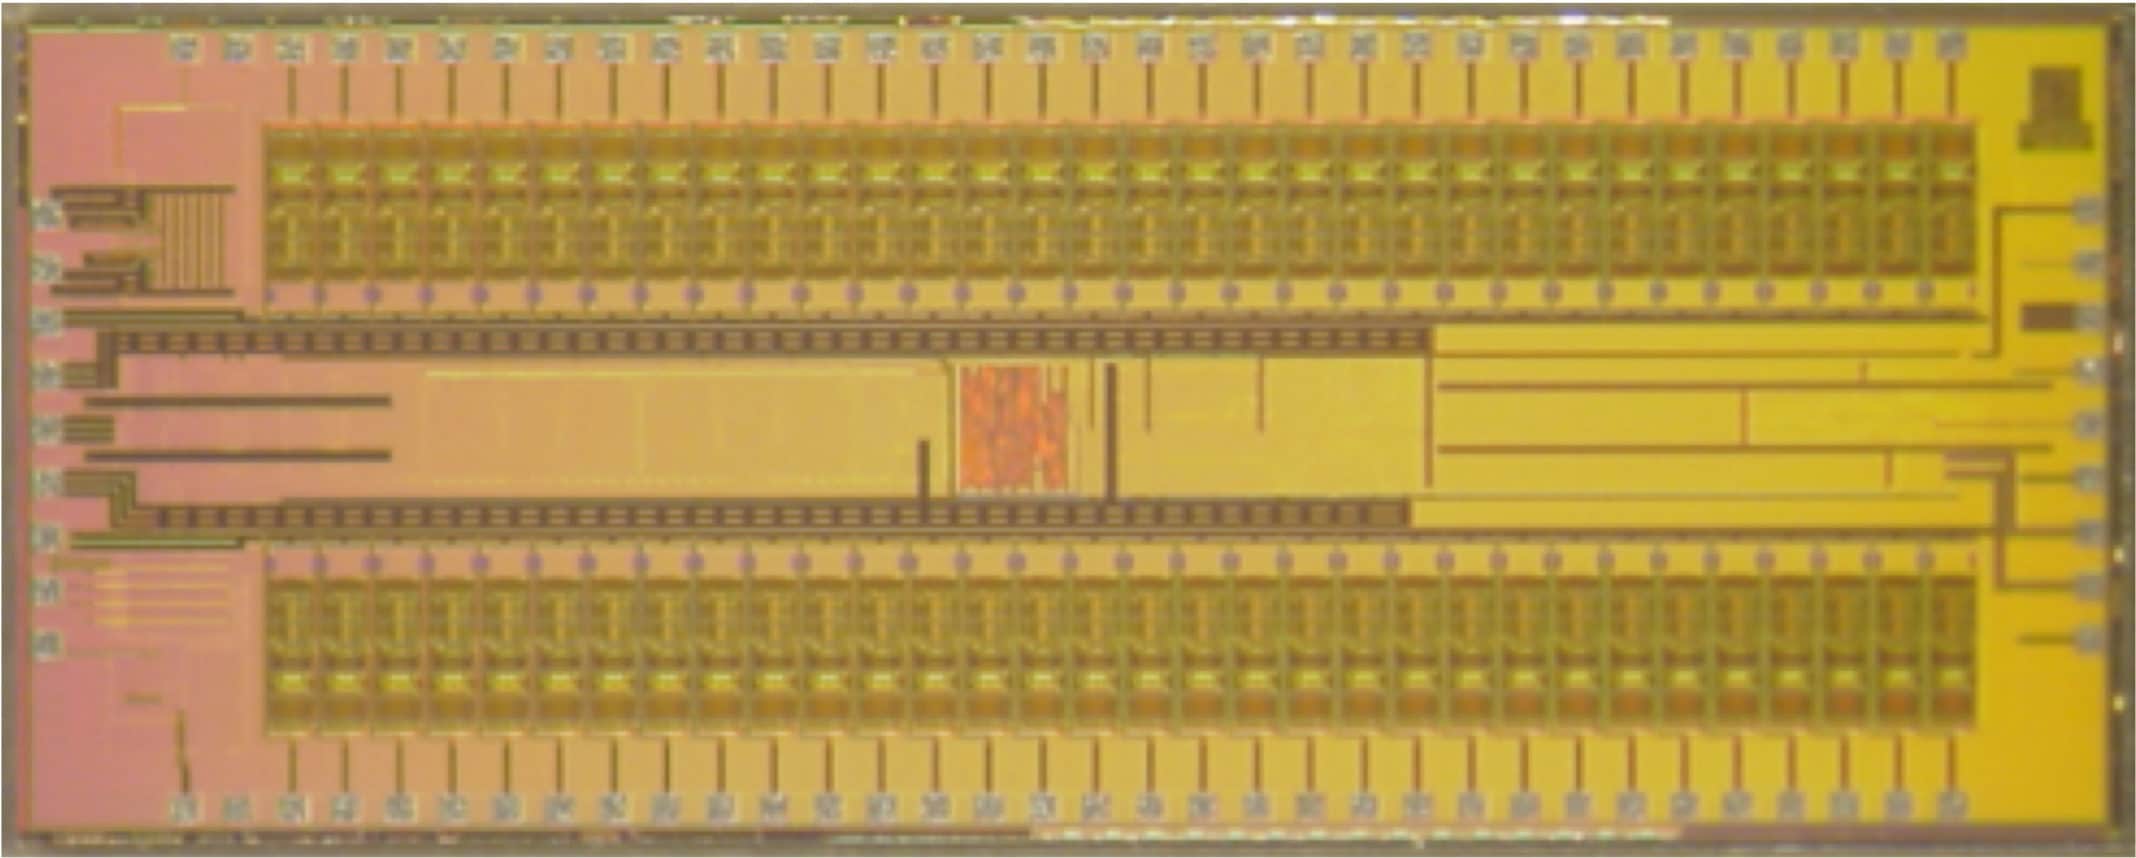 WAND’s custom integrated circuits. (credit: Rikky Muller, UC Berkeley)